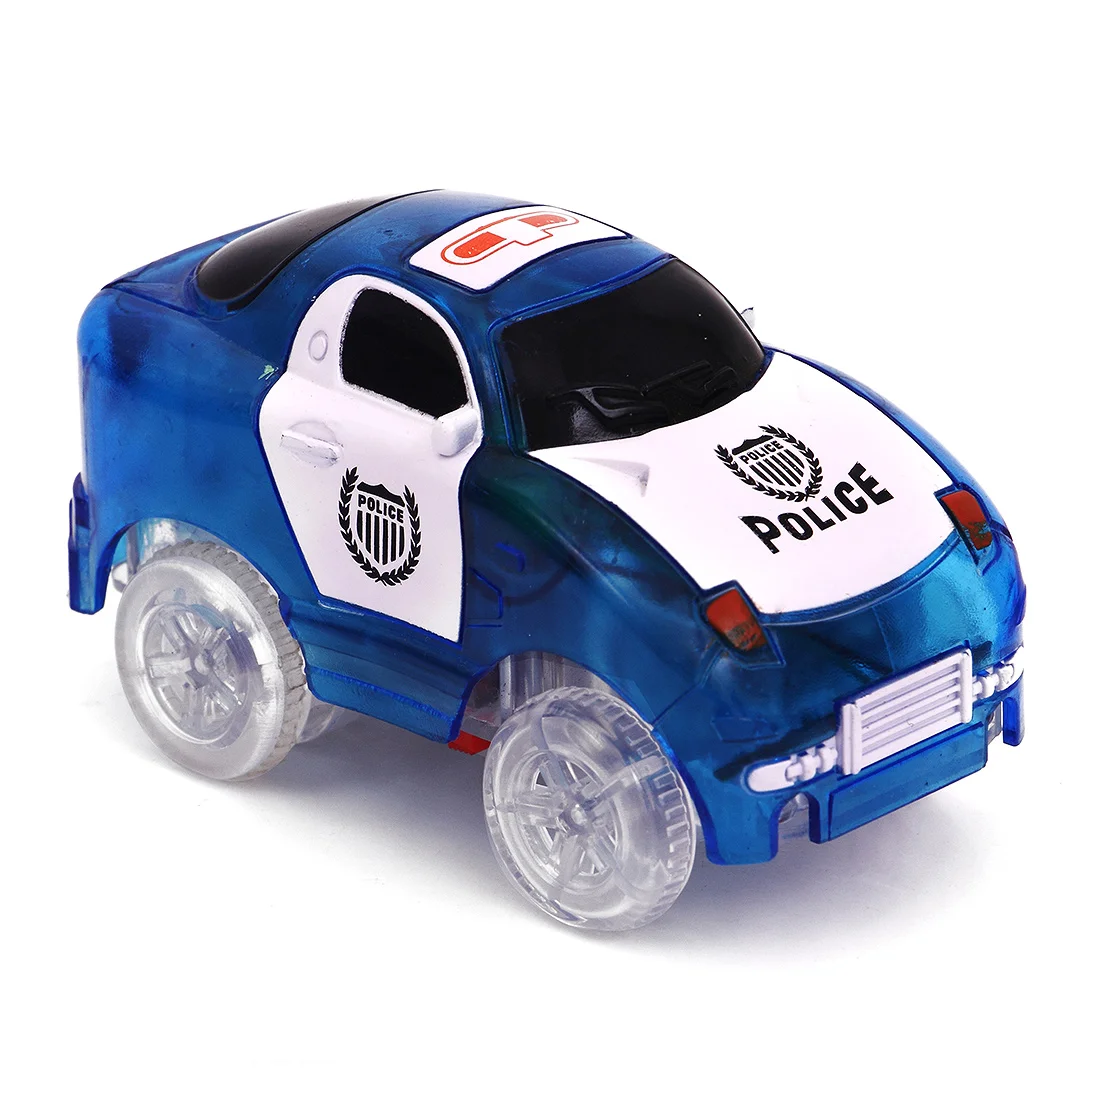 Shineheng-Magic-Electronics-LED-Cars-Toys-Flashing-Lights-Racing-Car-Boys-Birthday-Gift-Kids-Toy-Play-with-Tracks-Together-3